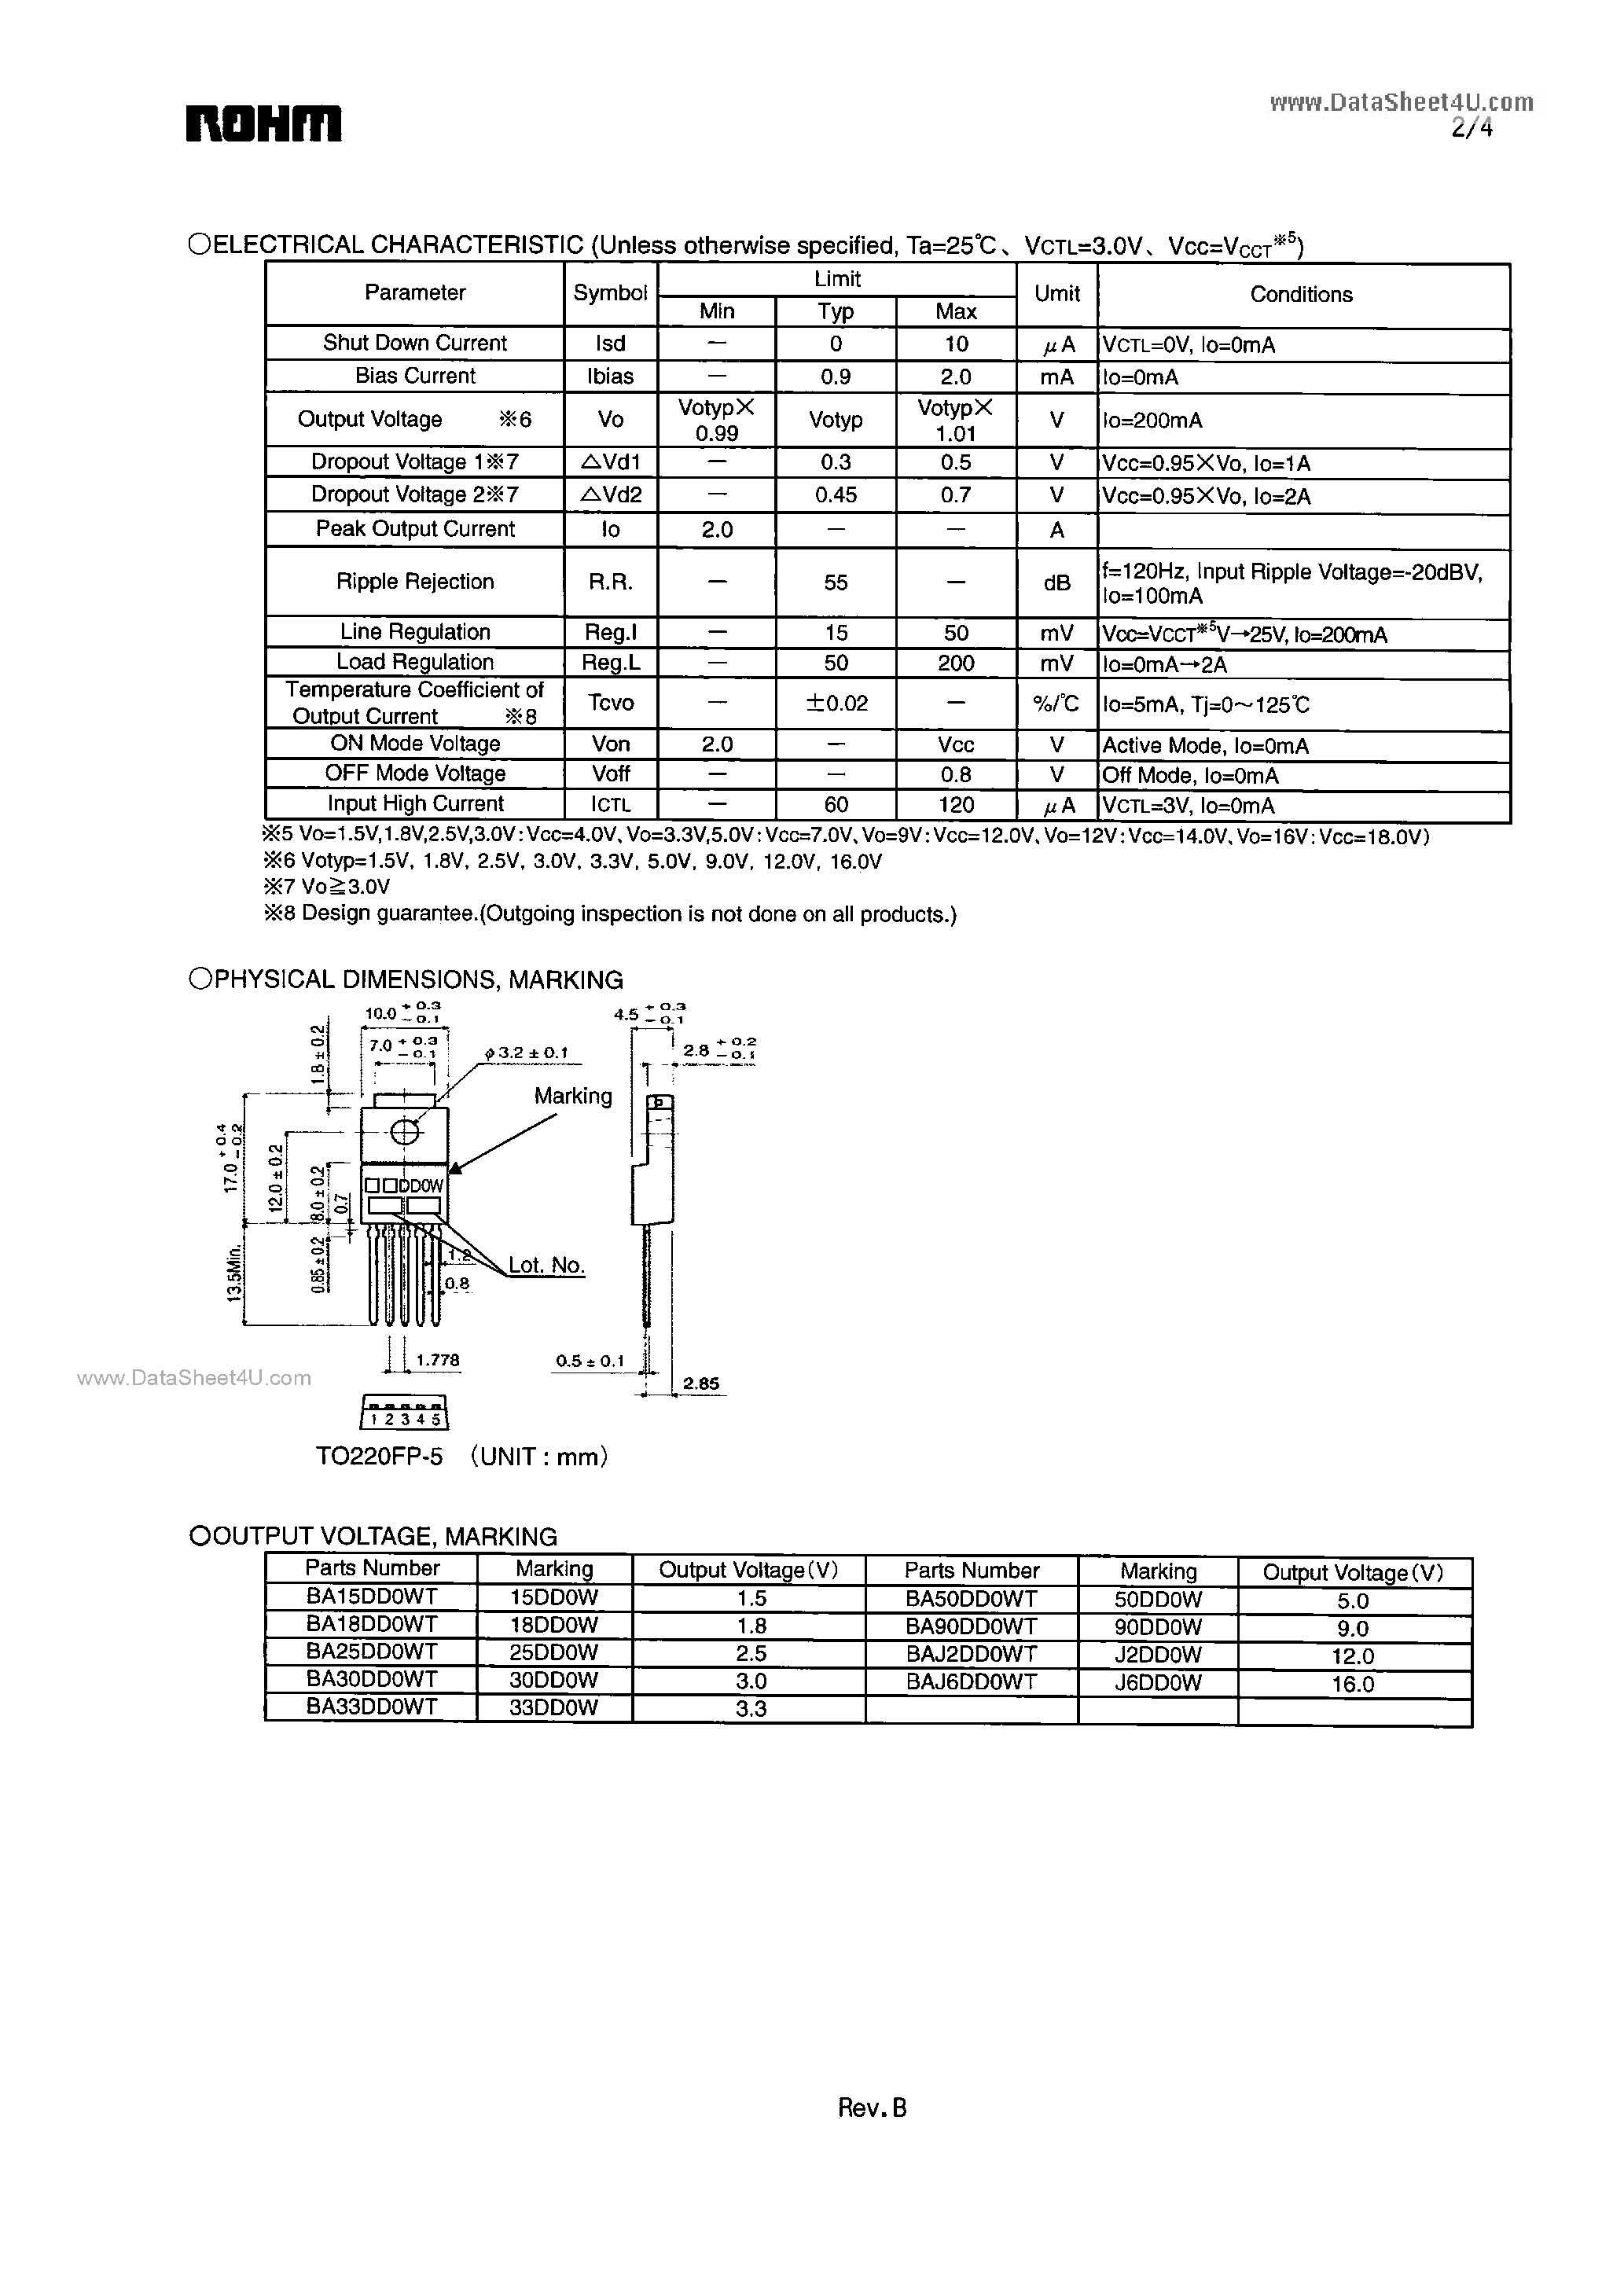 Даташит BA25DD0WT - 2A Low Dropout Voltage Regulator страница 2